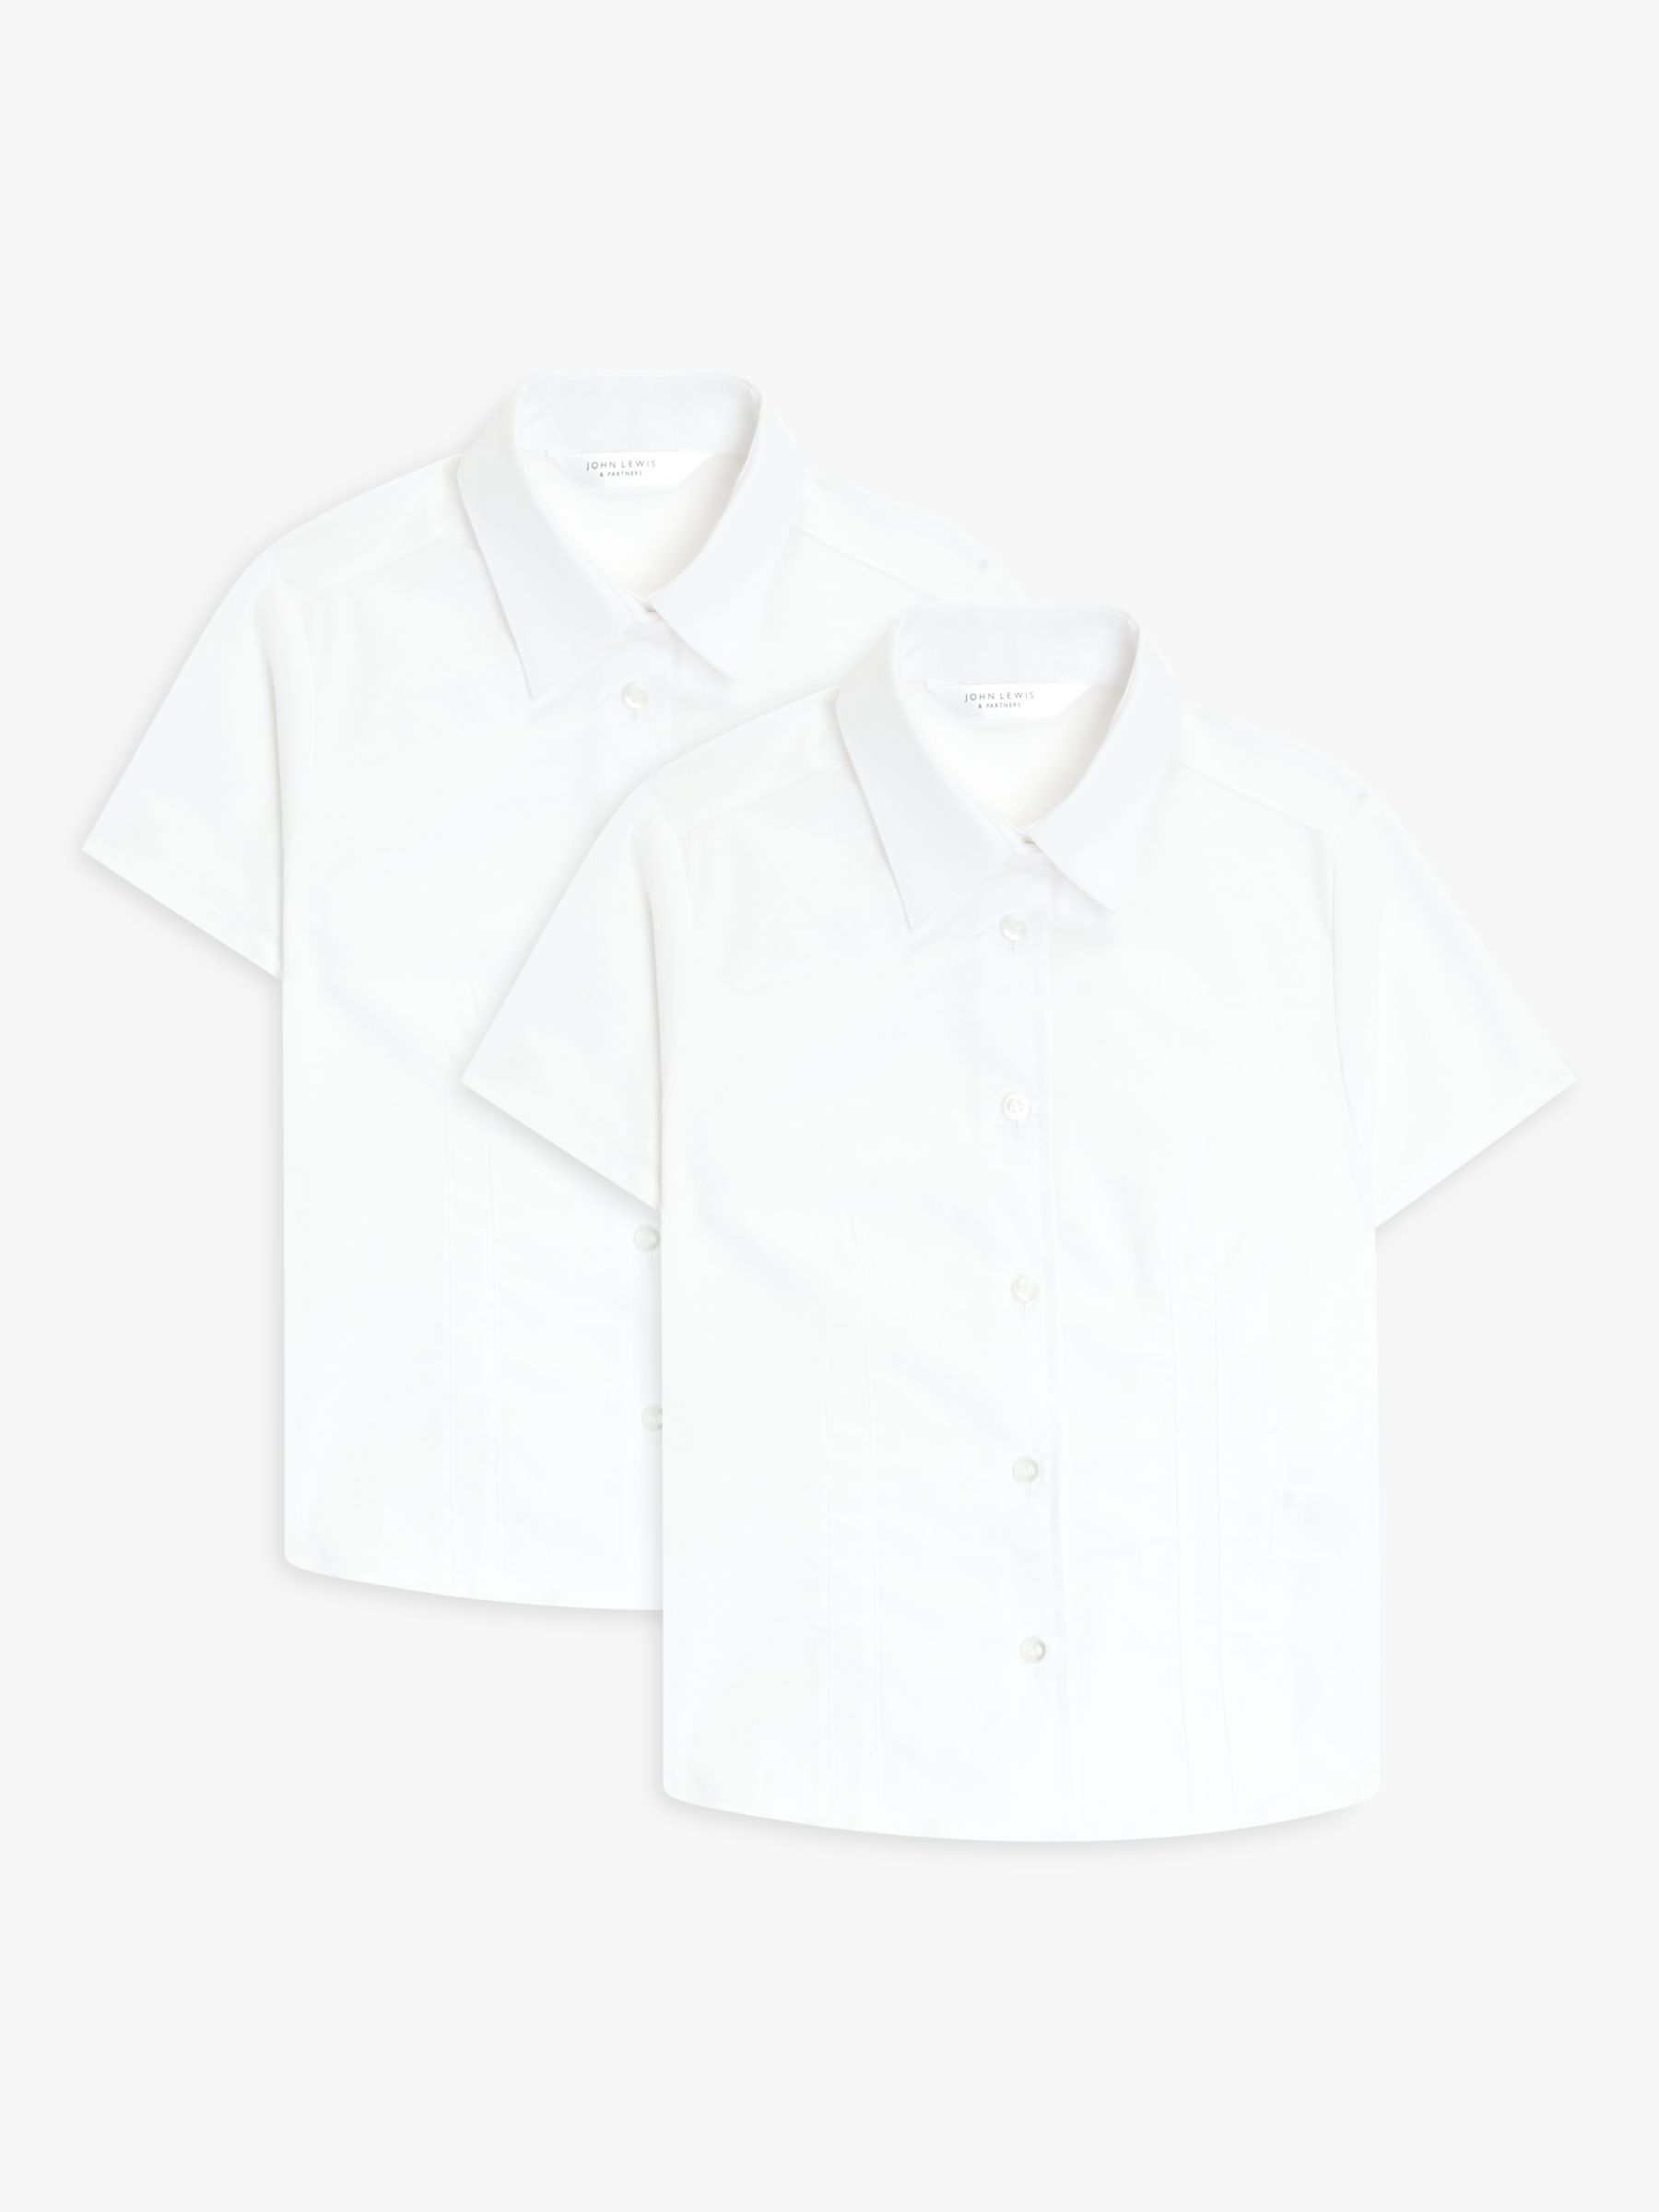 Buy John Lewis Organic Cotton Short Sleeve School Blouse, Pack of 2, White Online at johnlewis.com